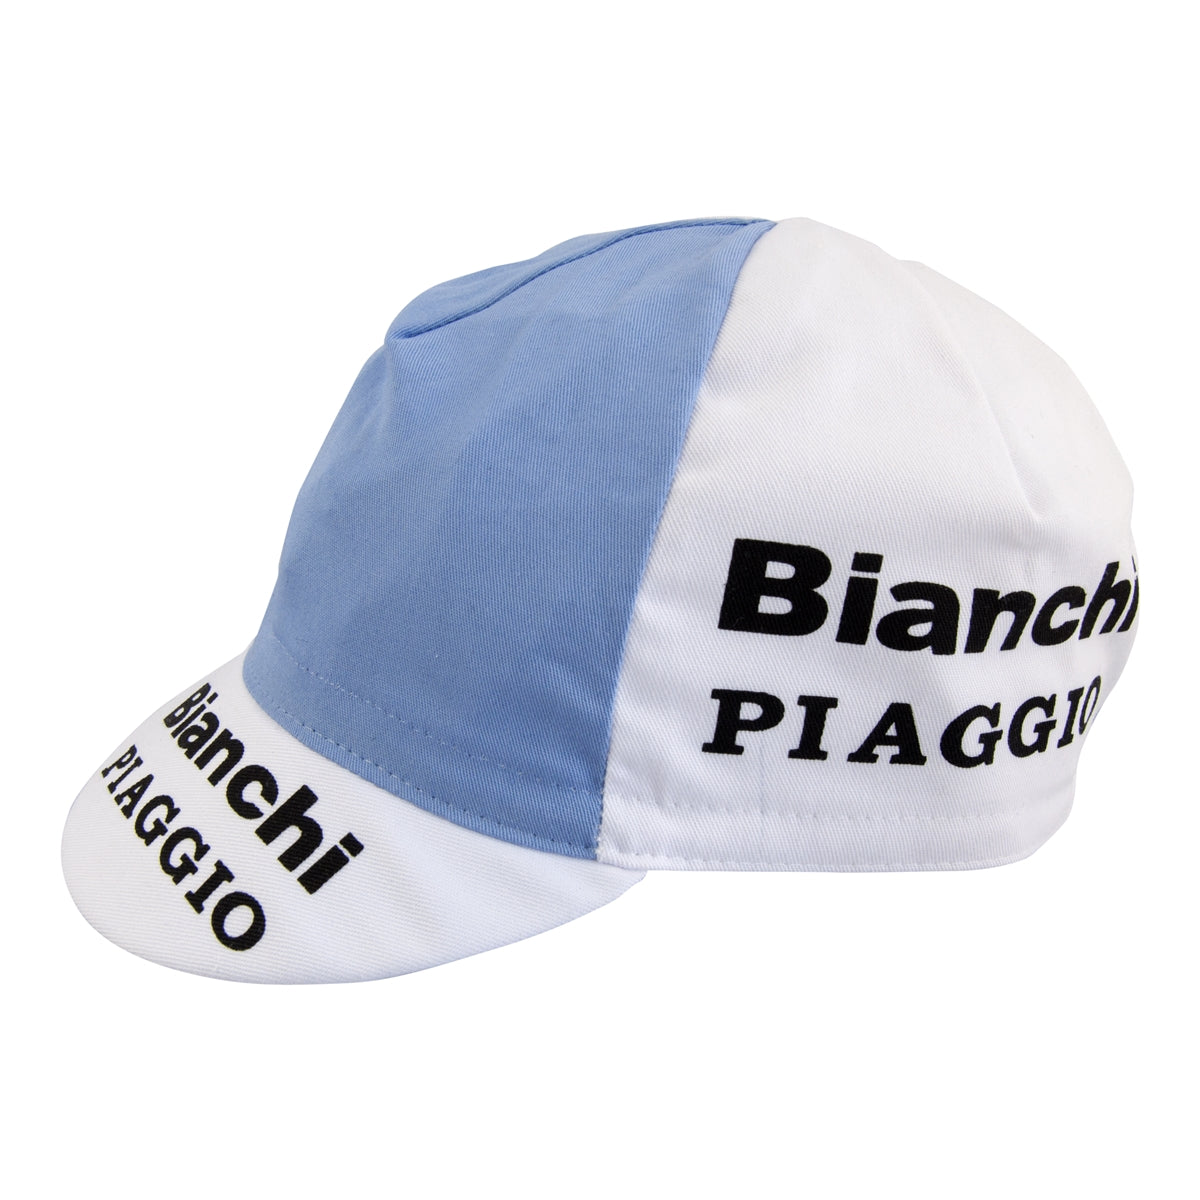 Apis Bianchi Piaggio Vintage Cycling Cap